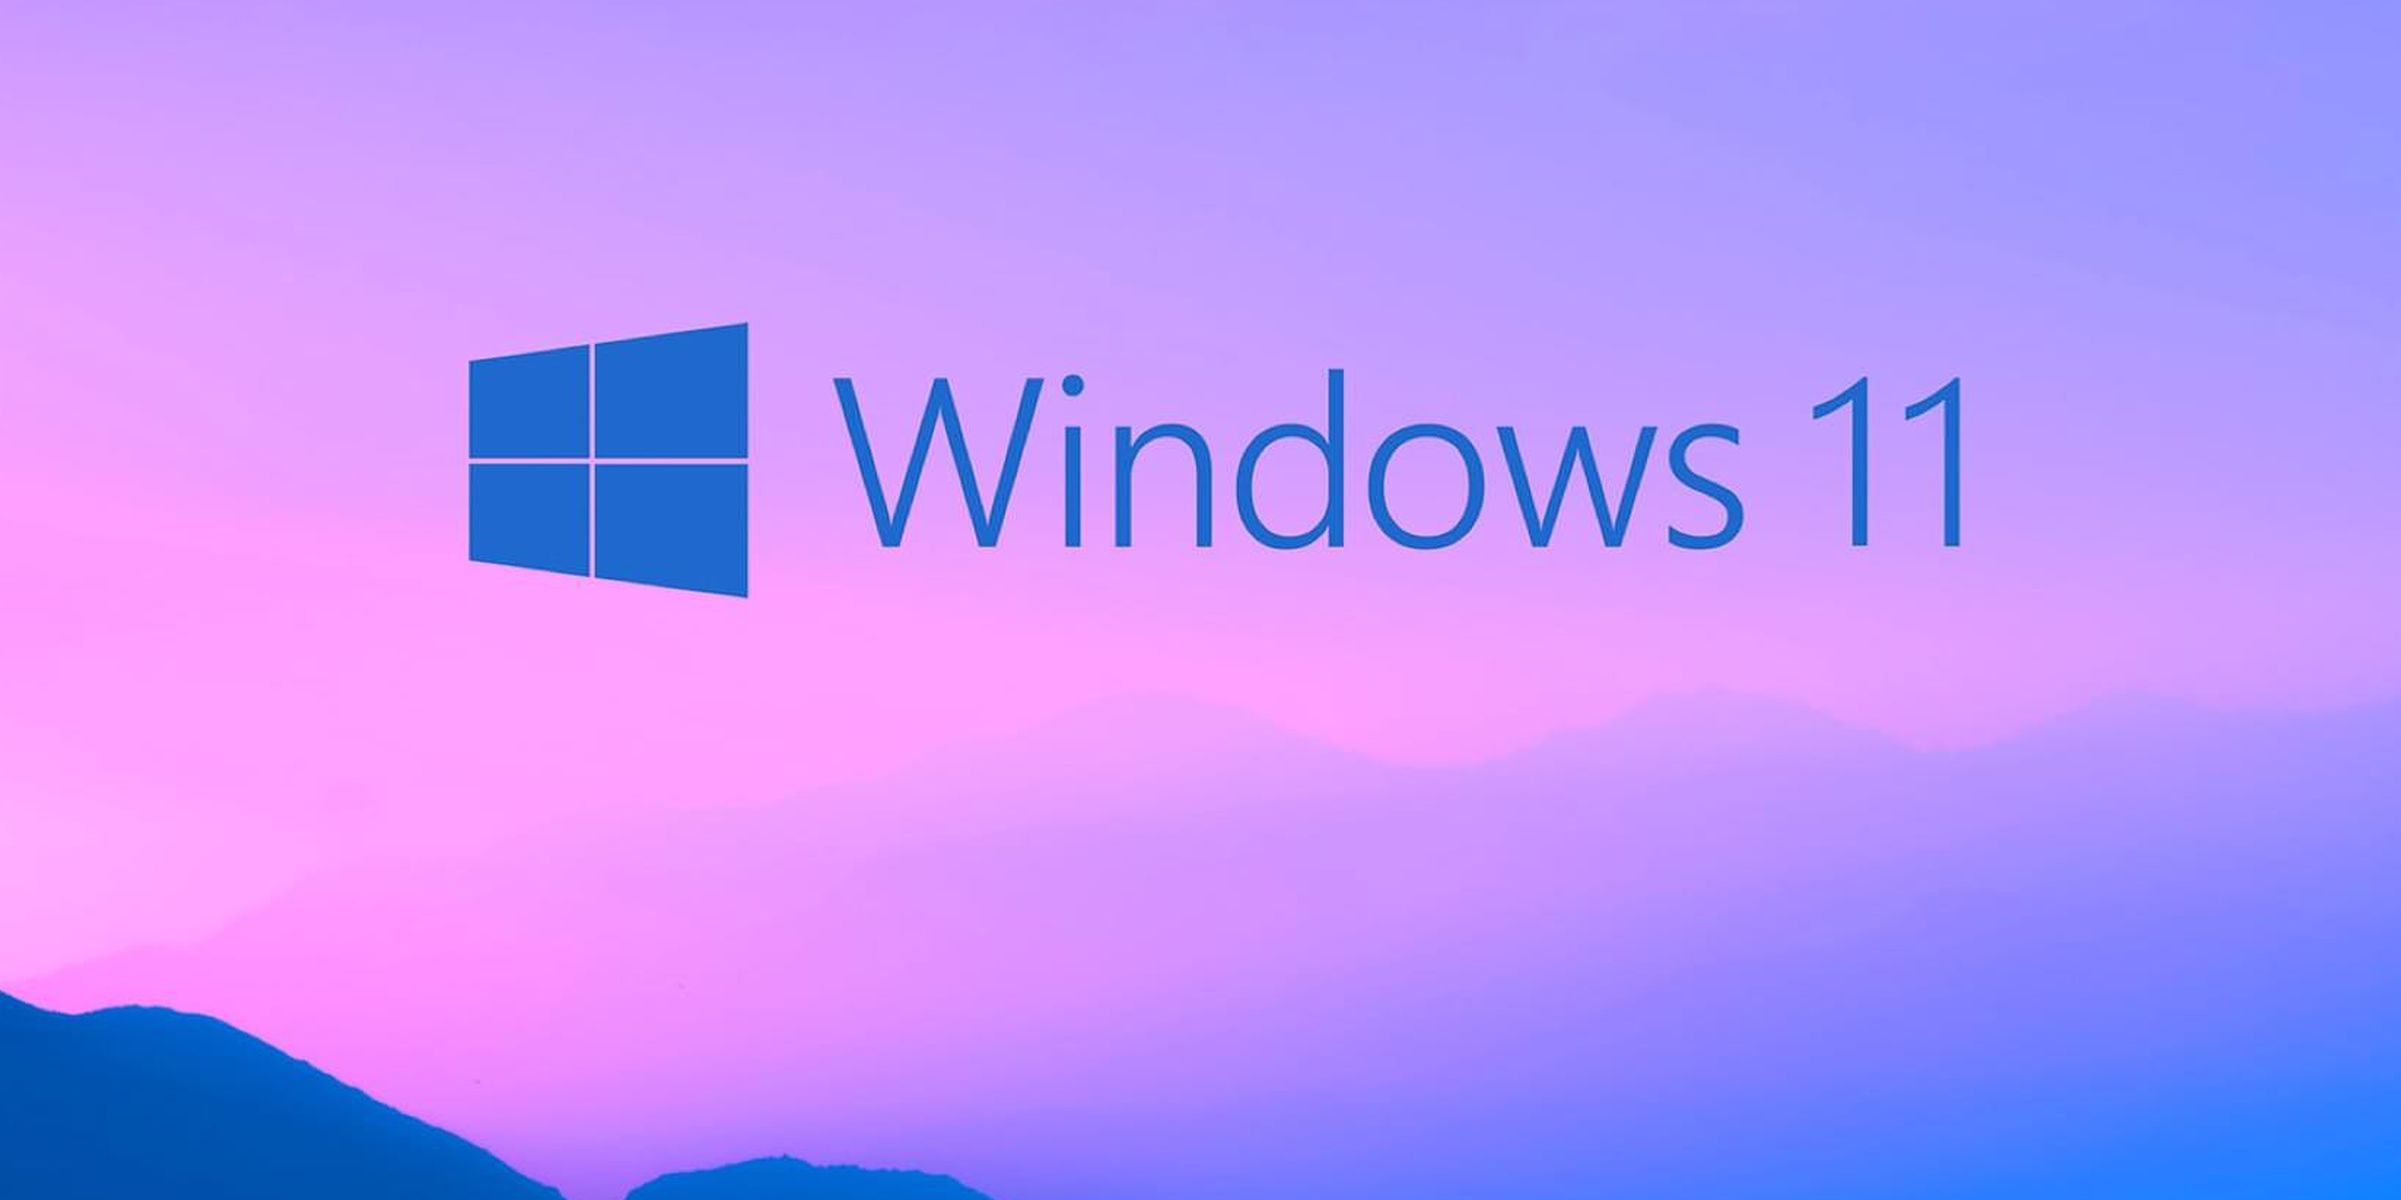 Красивый рабочий стол windows 11. Windows 11 Pro. Шиндовс 11. Картинки Windows 11. Windows oboy.